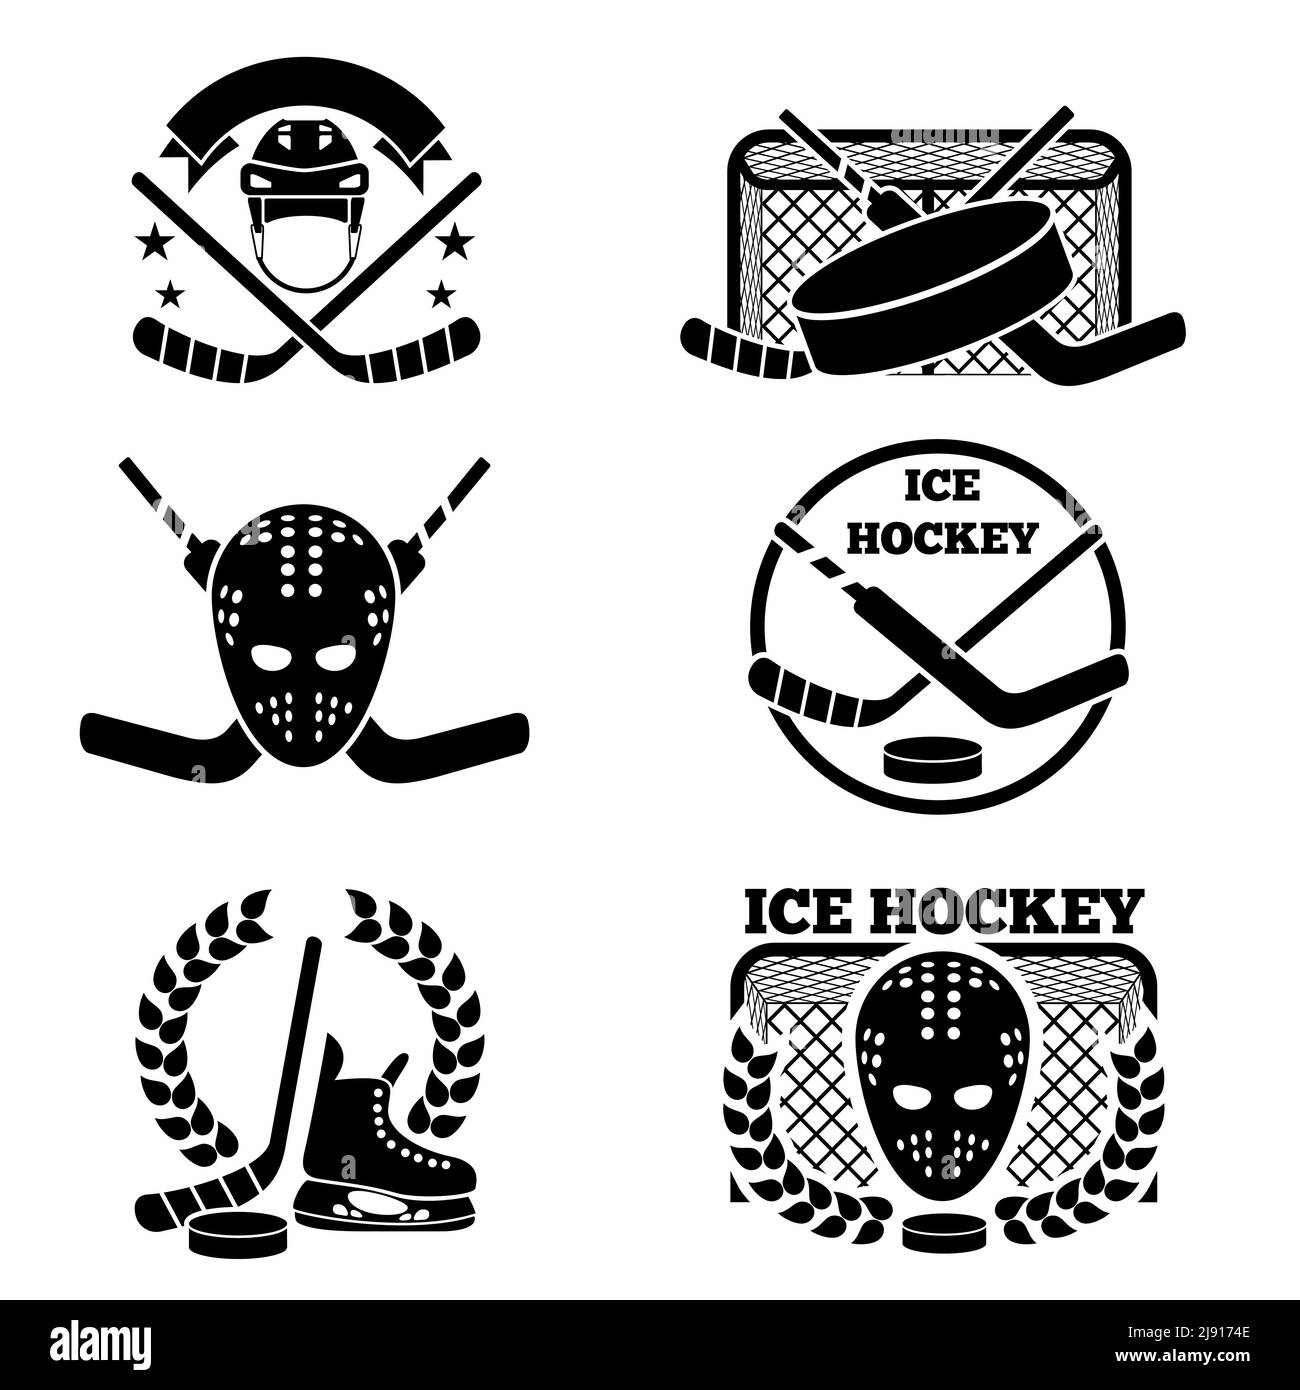 Eishockey-Emblem und Logo-Set. Sport und Spiel, Team-Emblem, Vektor-Illustration Stock Vektor